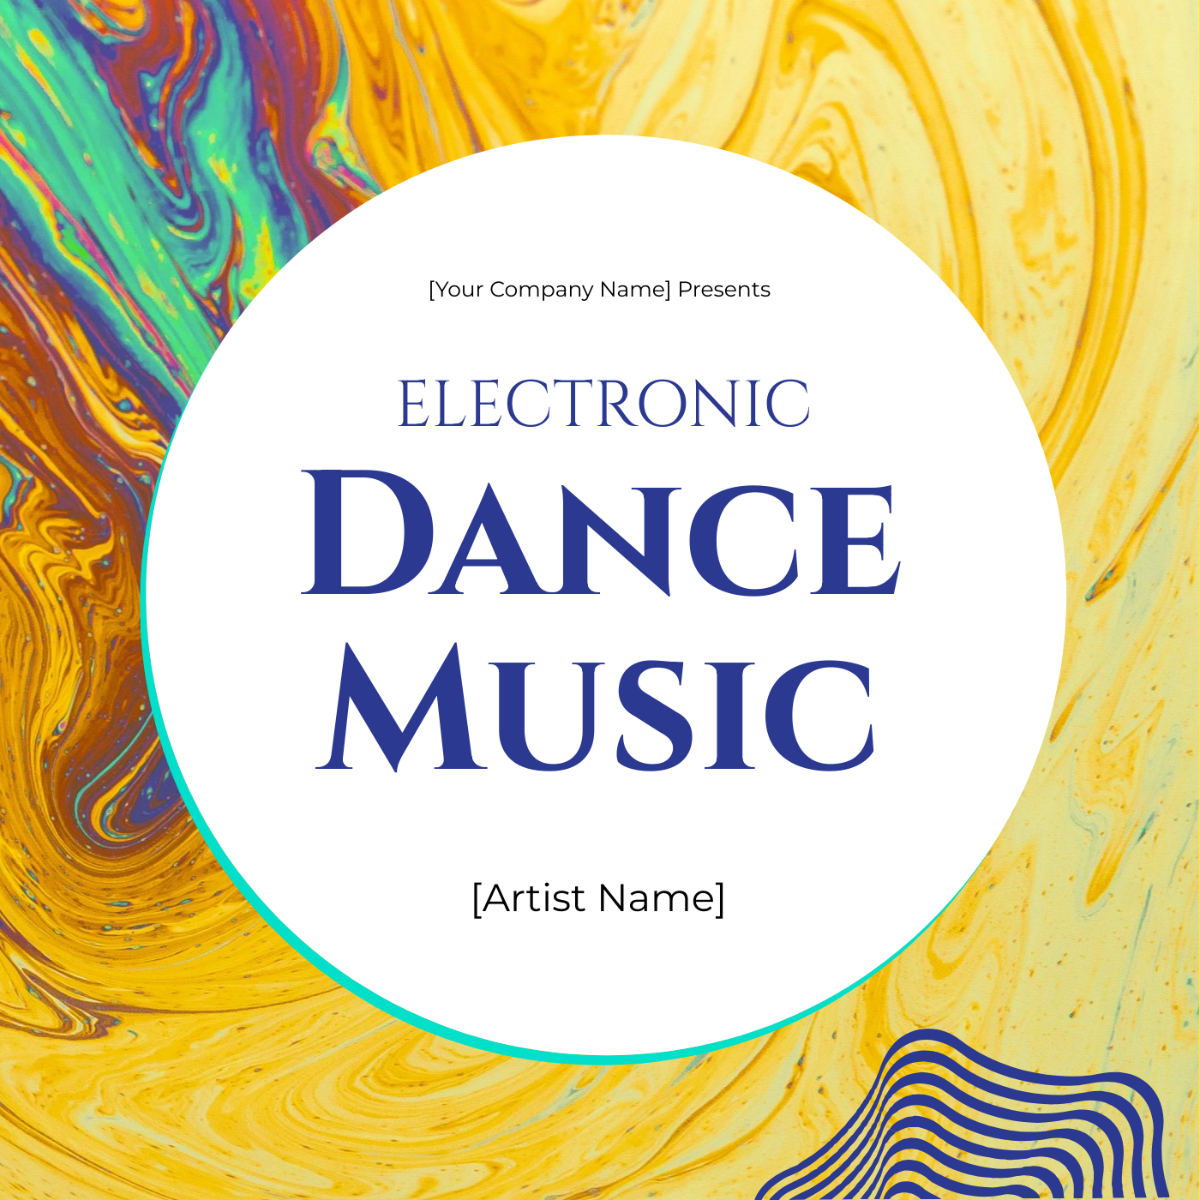 Electronic Dance Music Album Cover